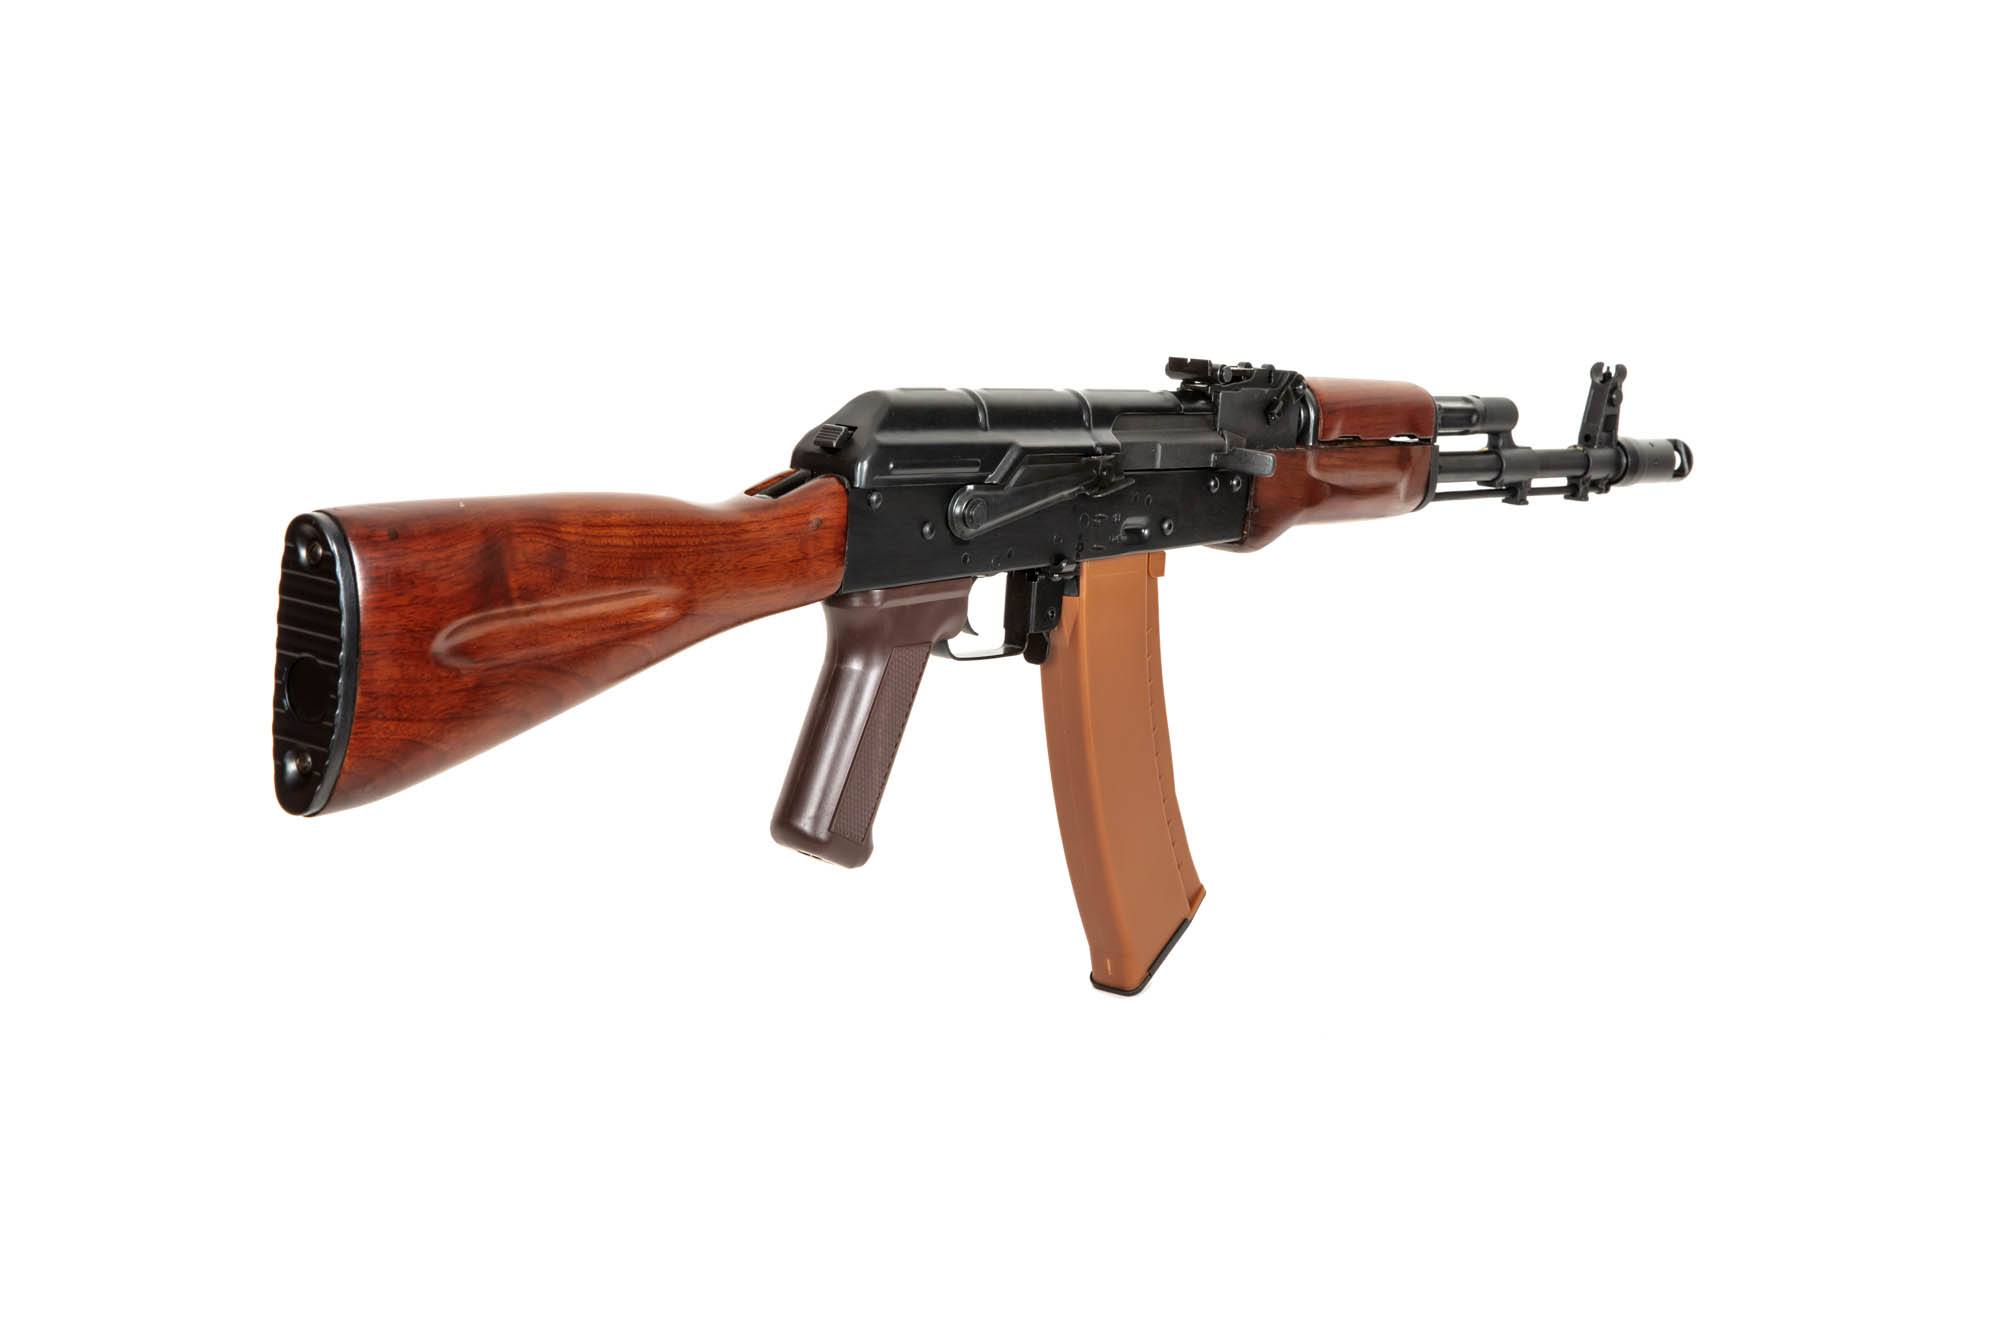 AK-74N Stock and Magazine